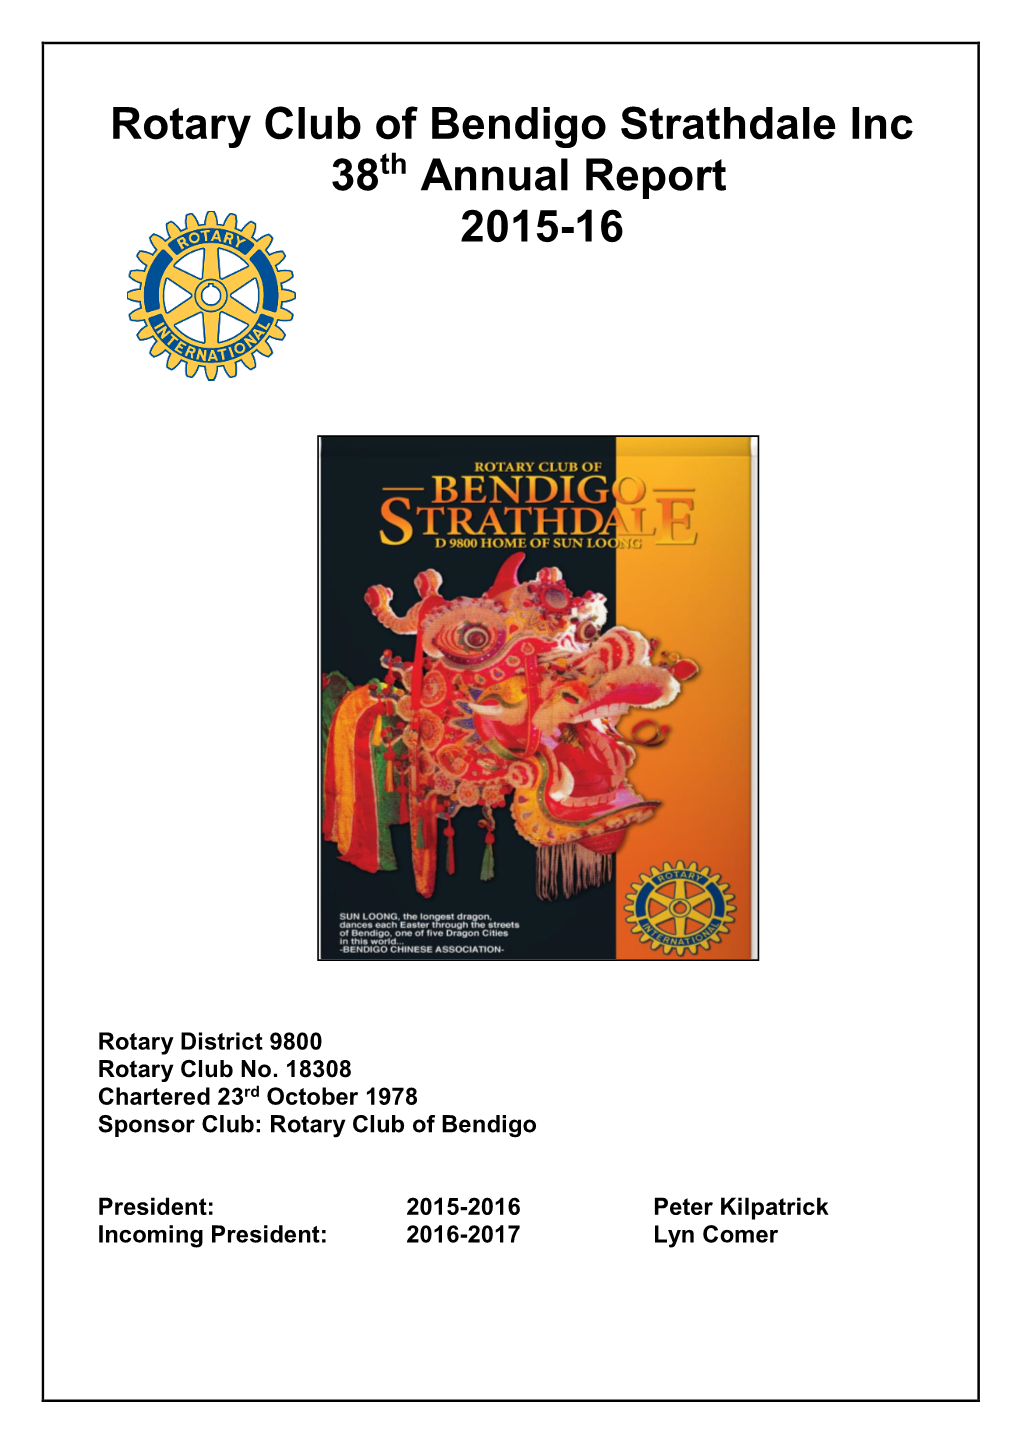 Rotary Club of Bendigo Strathdale Inc 2006